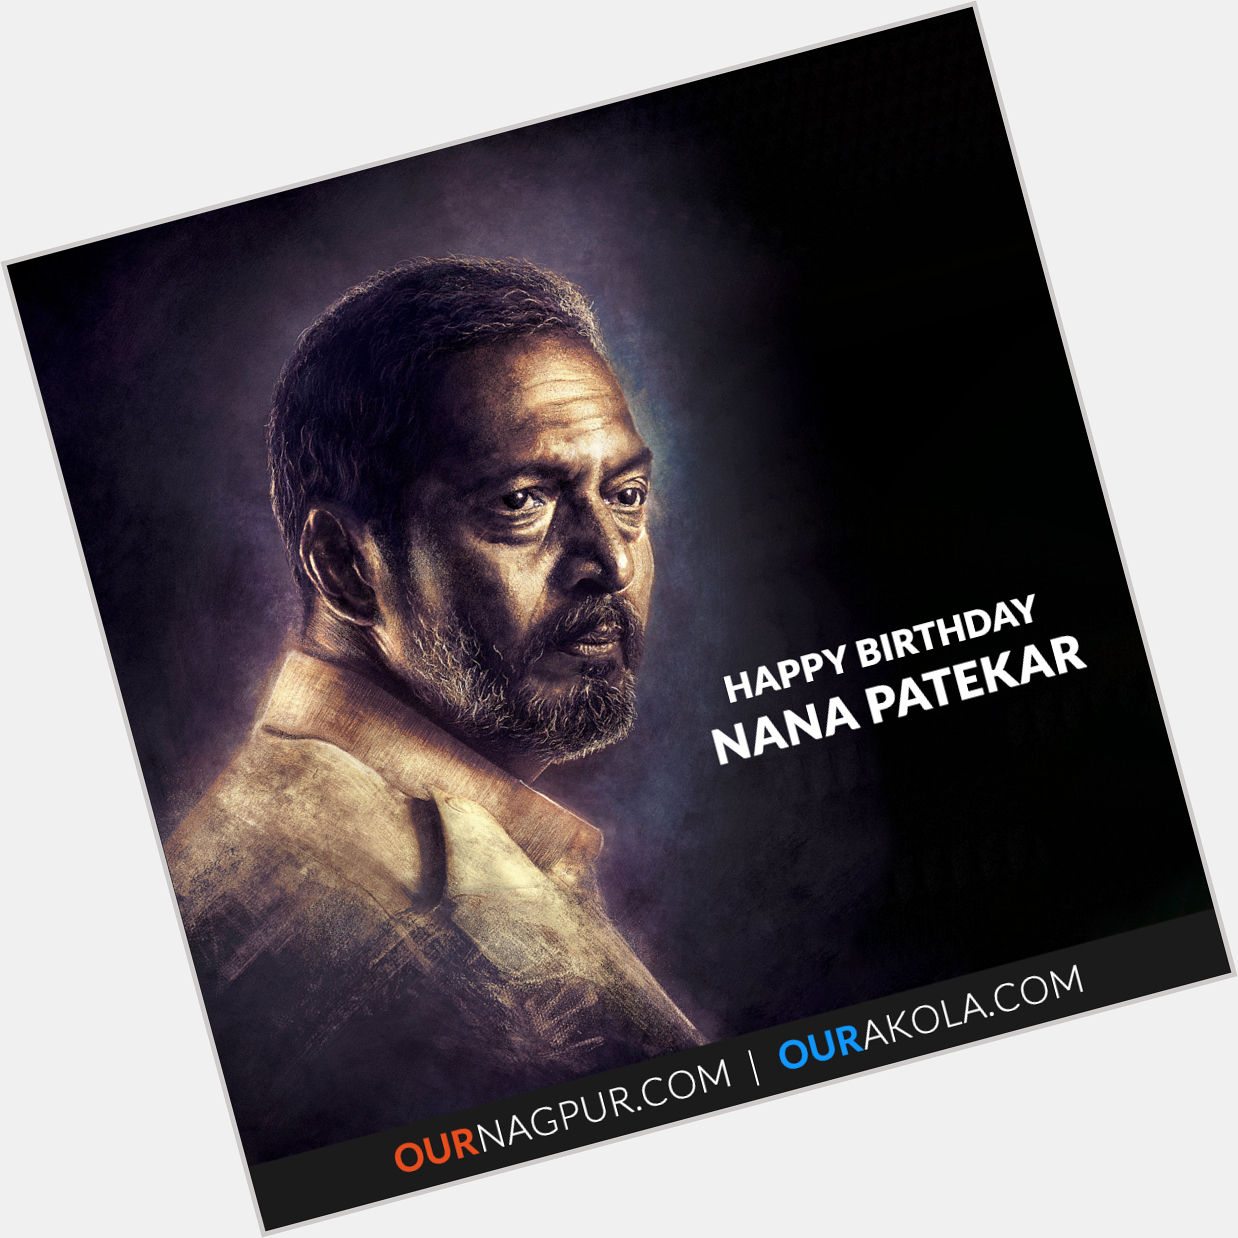 Wishing a very Happy birthday to Nana Patekar 